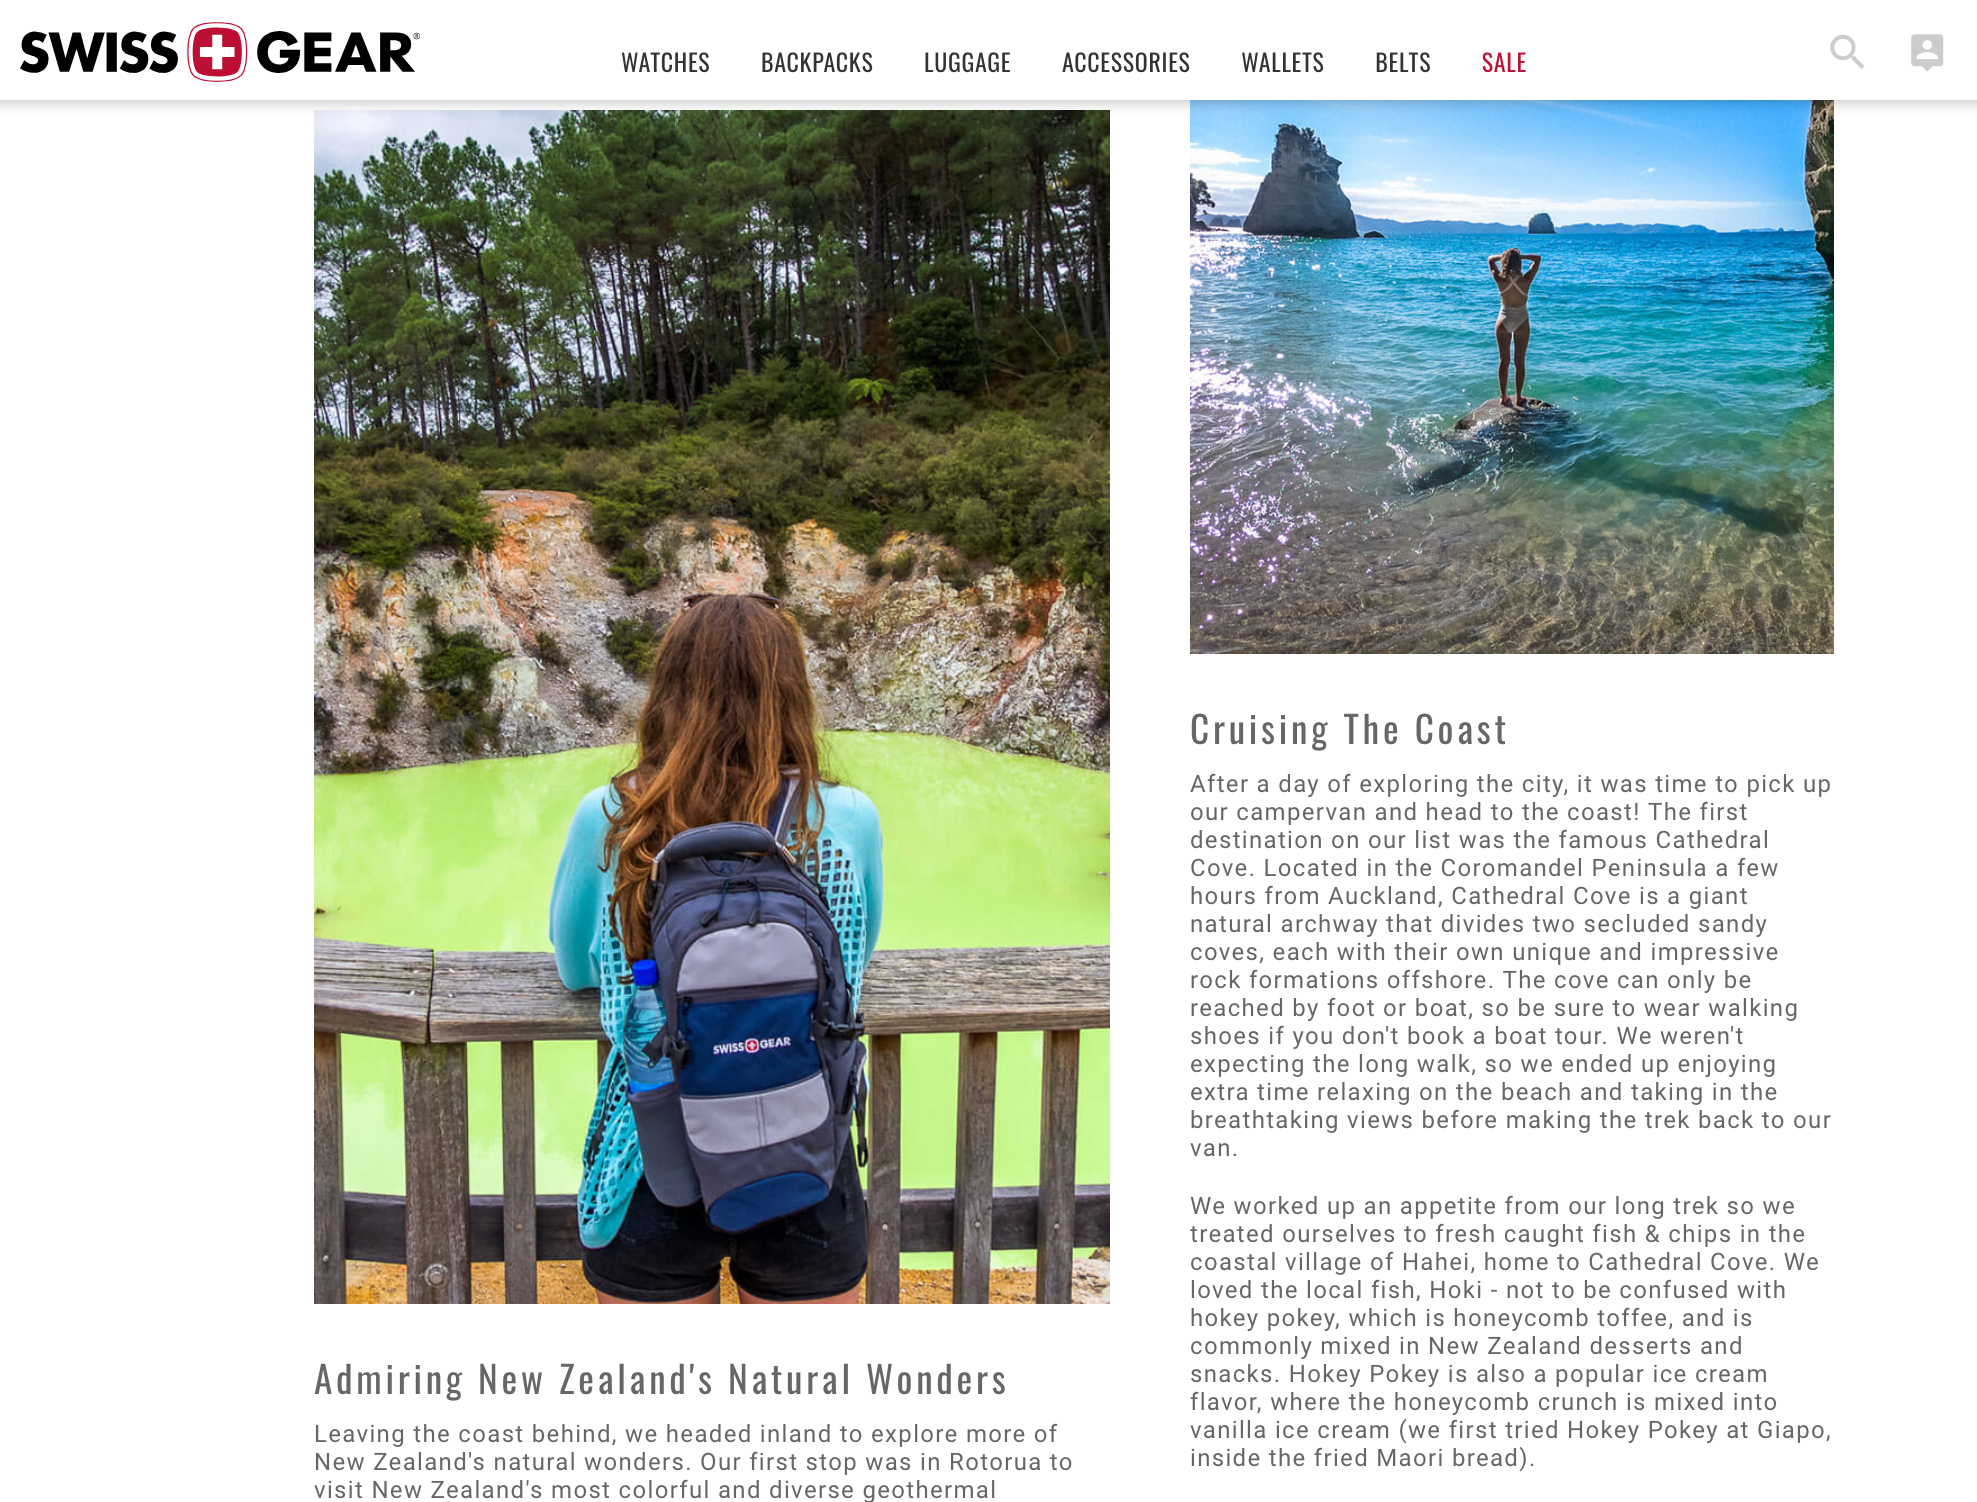 Read our New Zealand North Island on SWISSGEAR.com